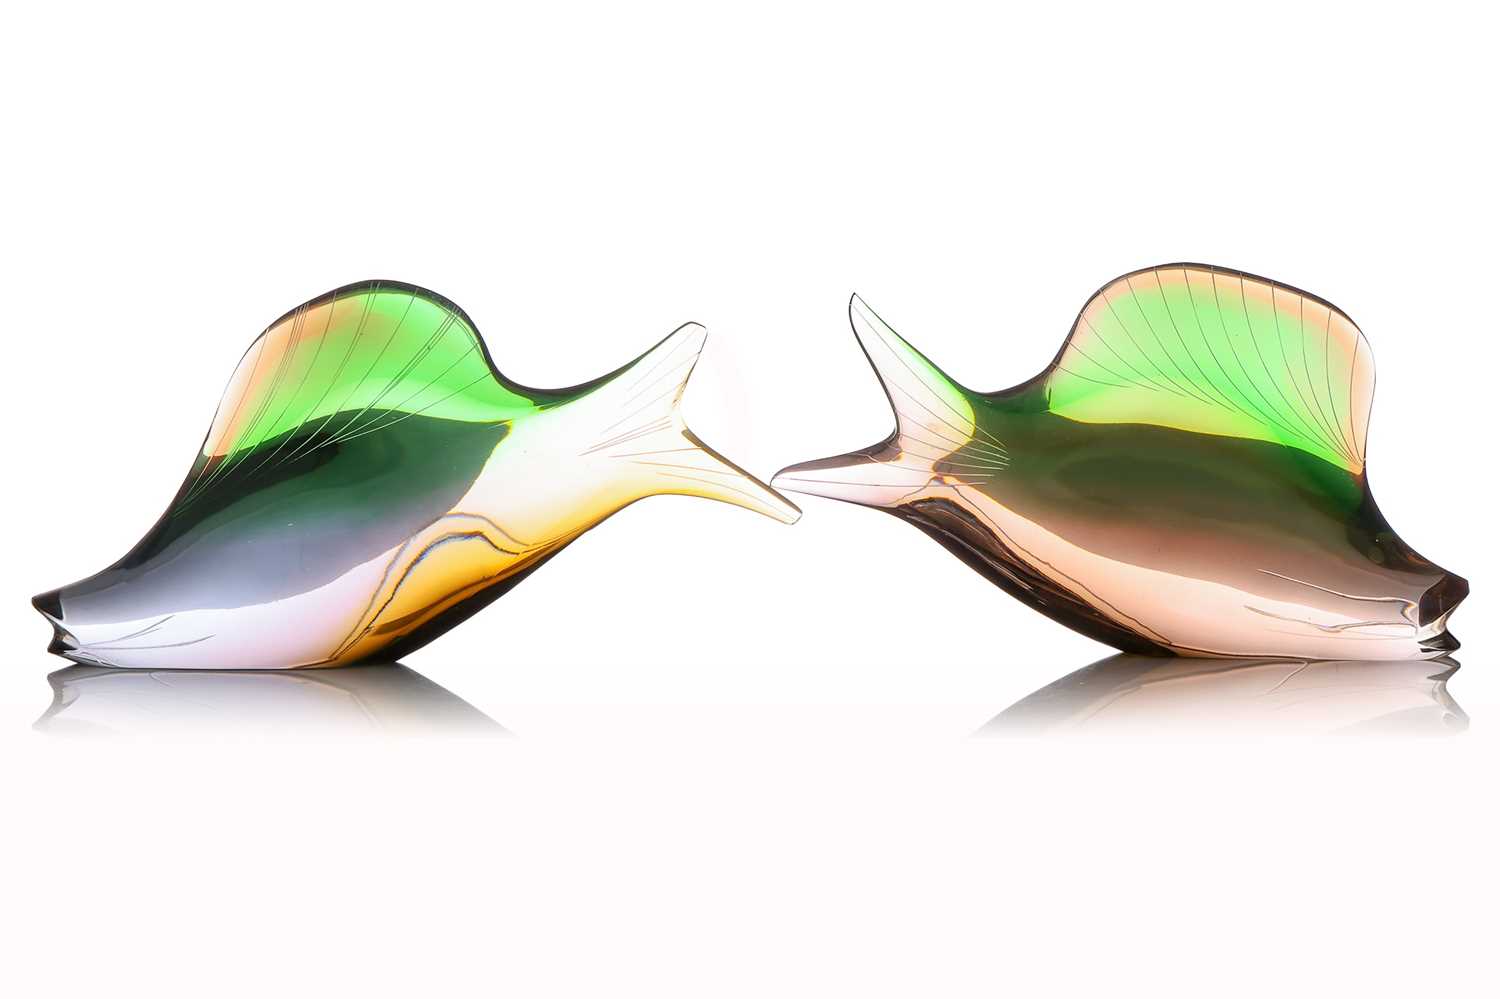 Rozinek and Honzik for Exbor (Czechoslovakia), two glass fish sculptures, of similar form in - Bild 3 aus 10